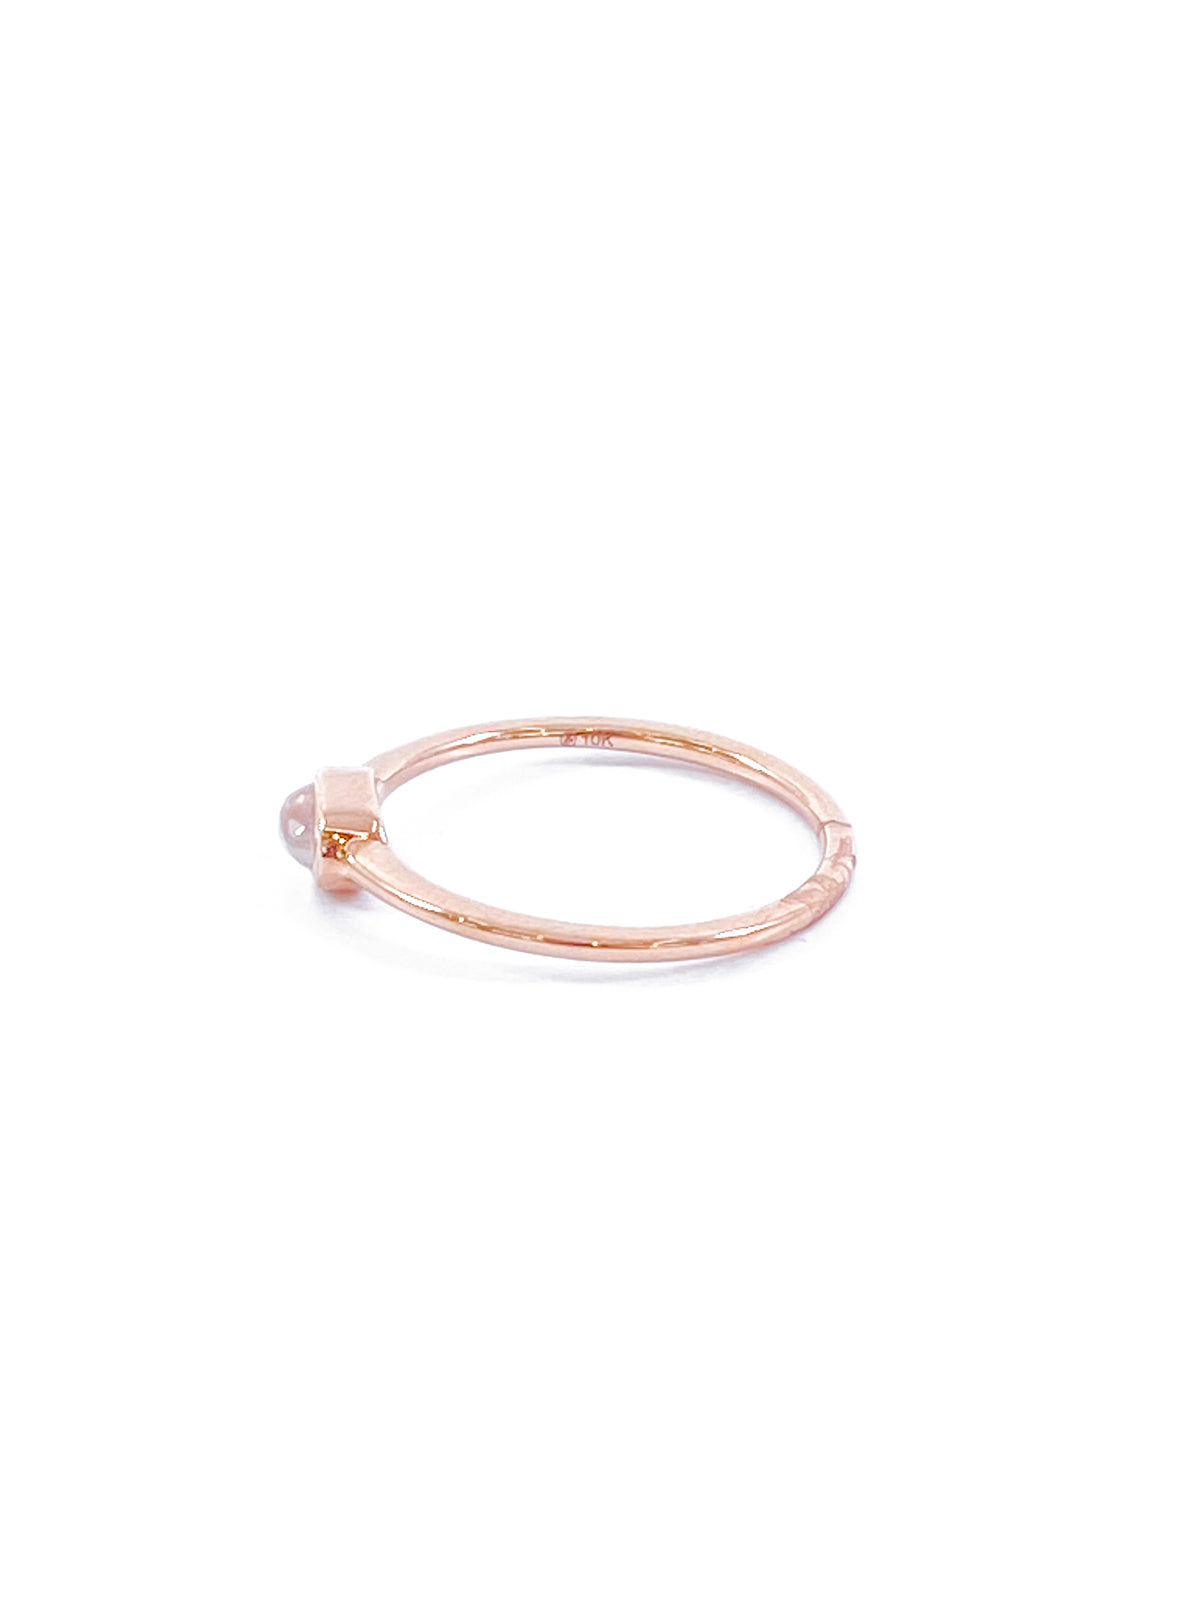 10K Rose Gold 0.25cttw Genuine Moonstone Ring, size 6.5